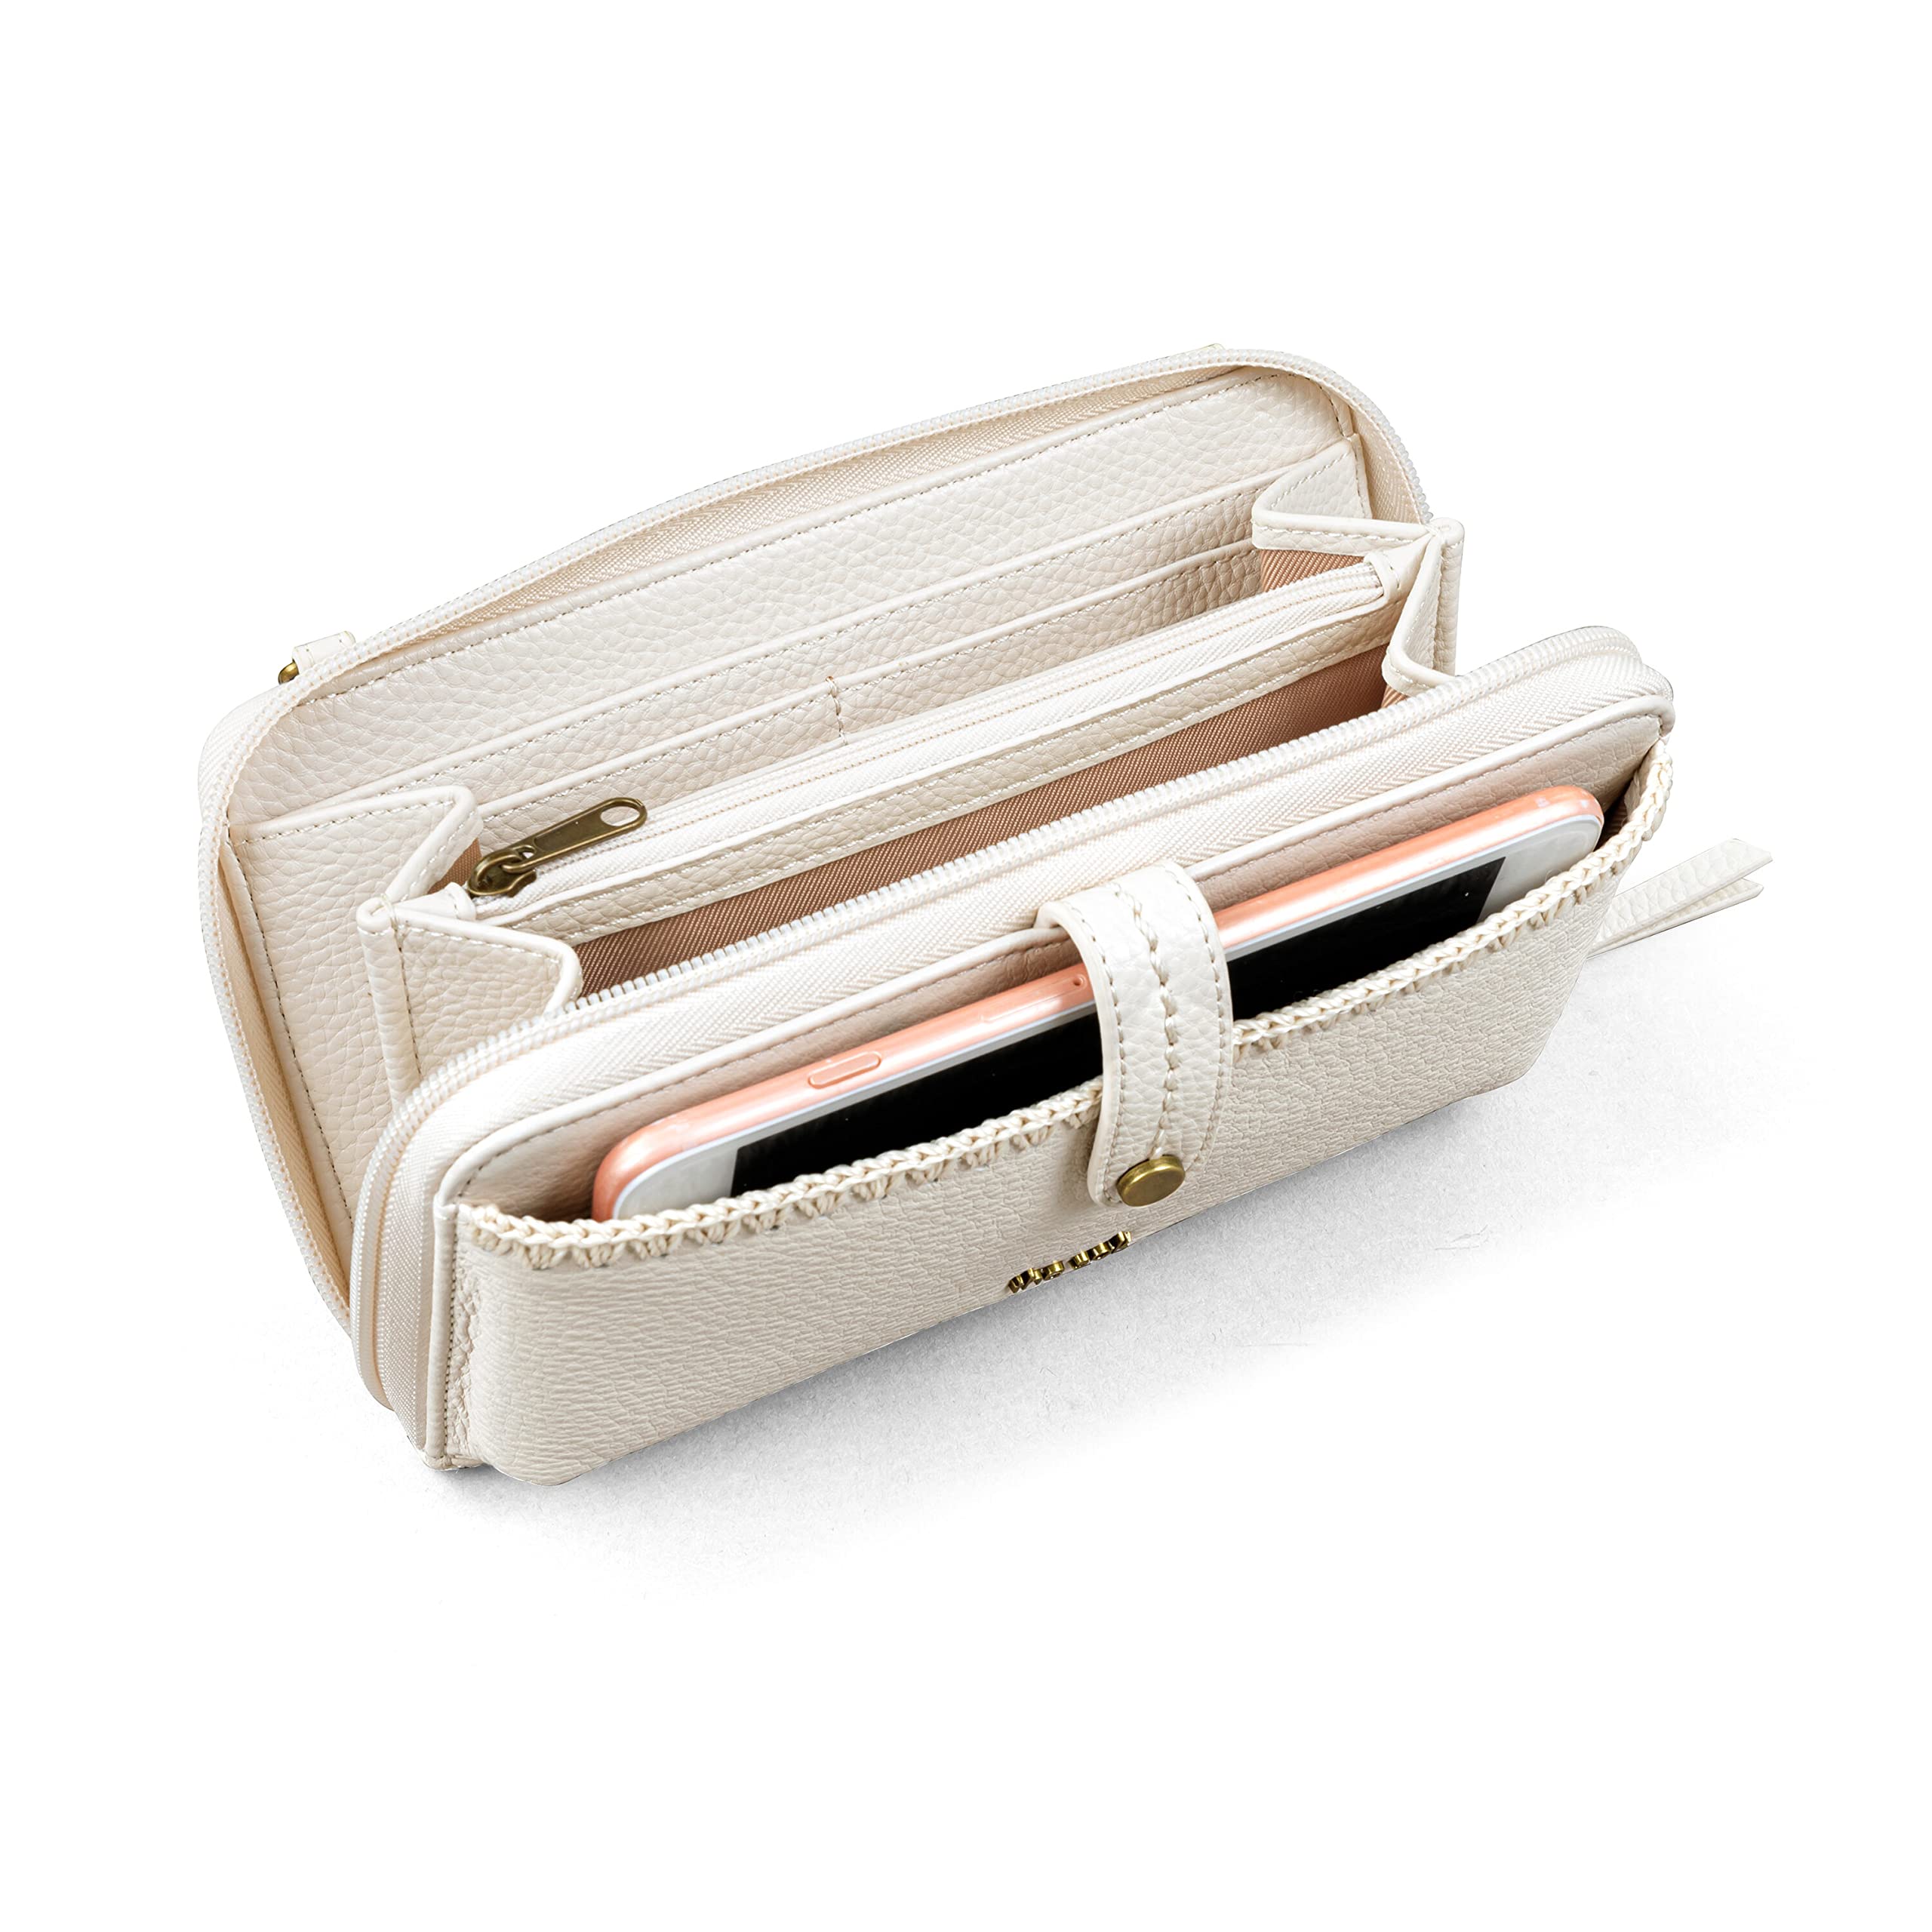 The Sak Iris Large Smartphone Crossbody Bag in Leather, Detachable Wristlet Strap